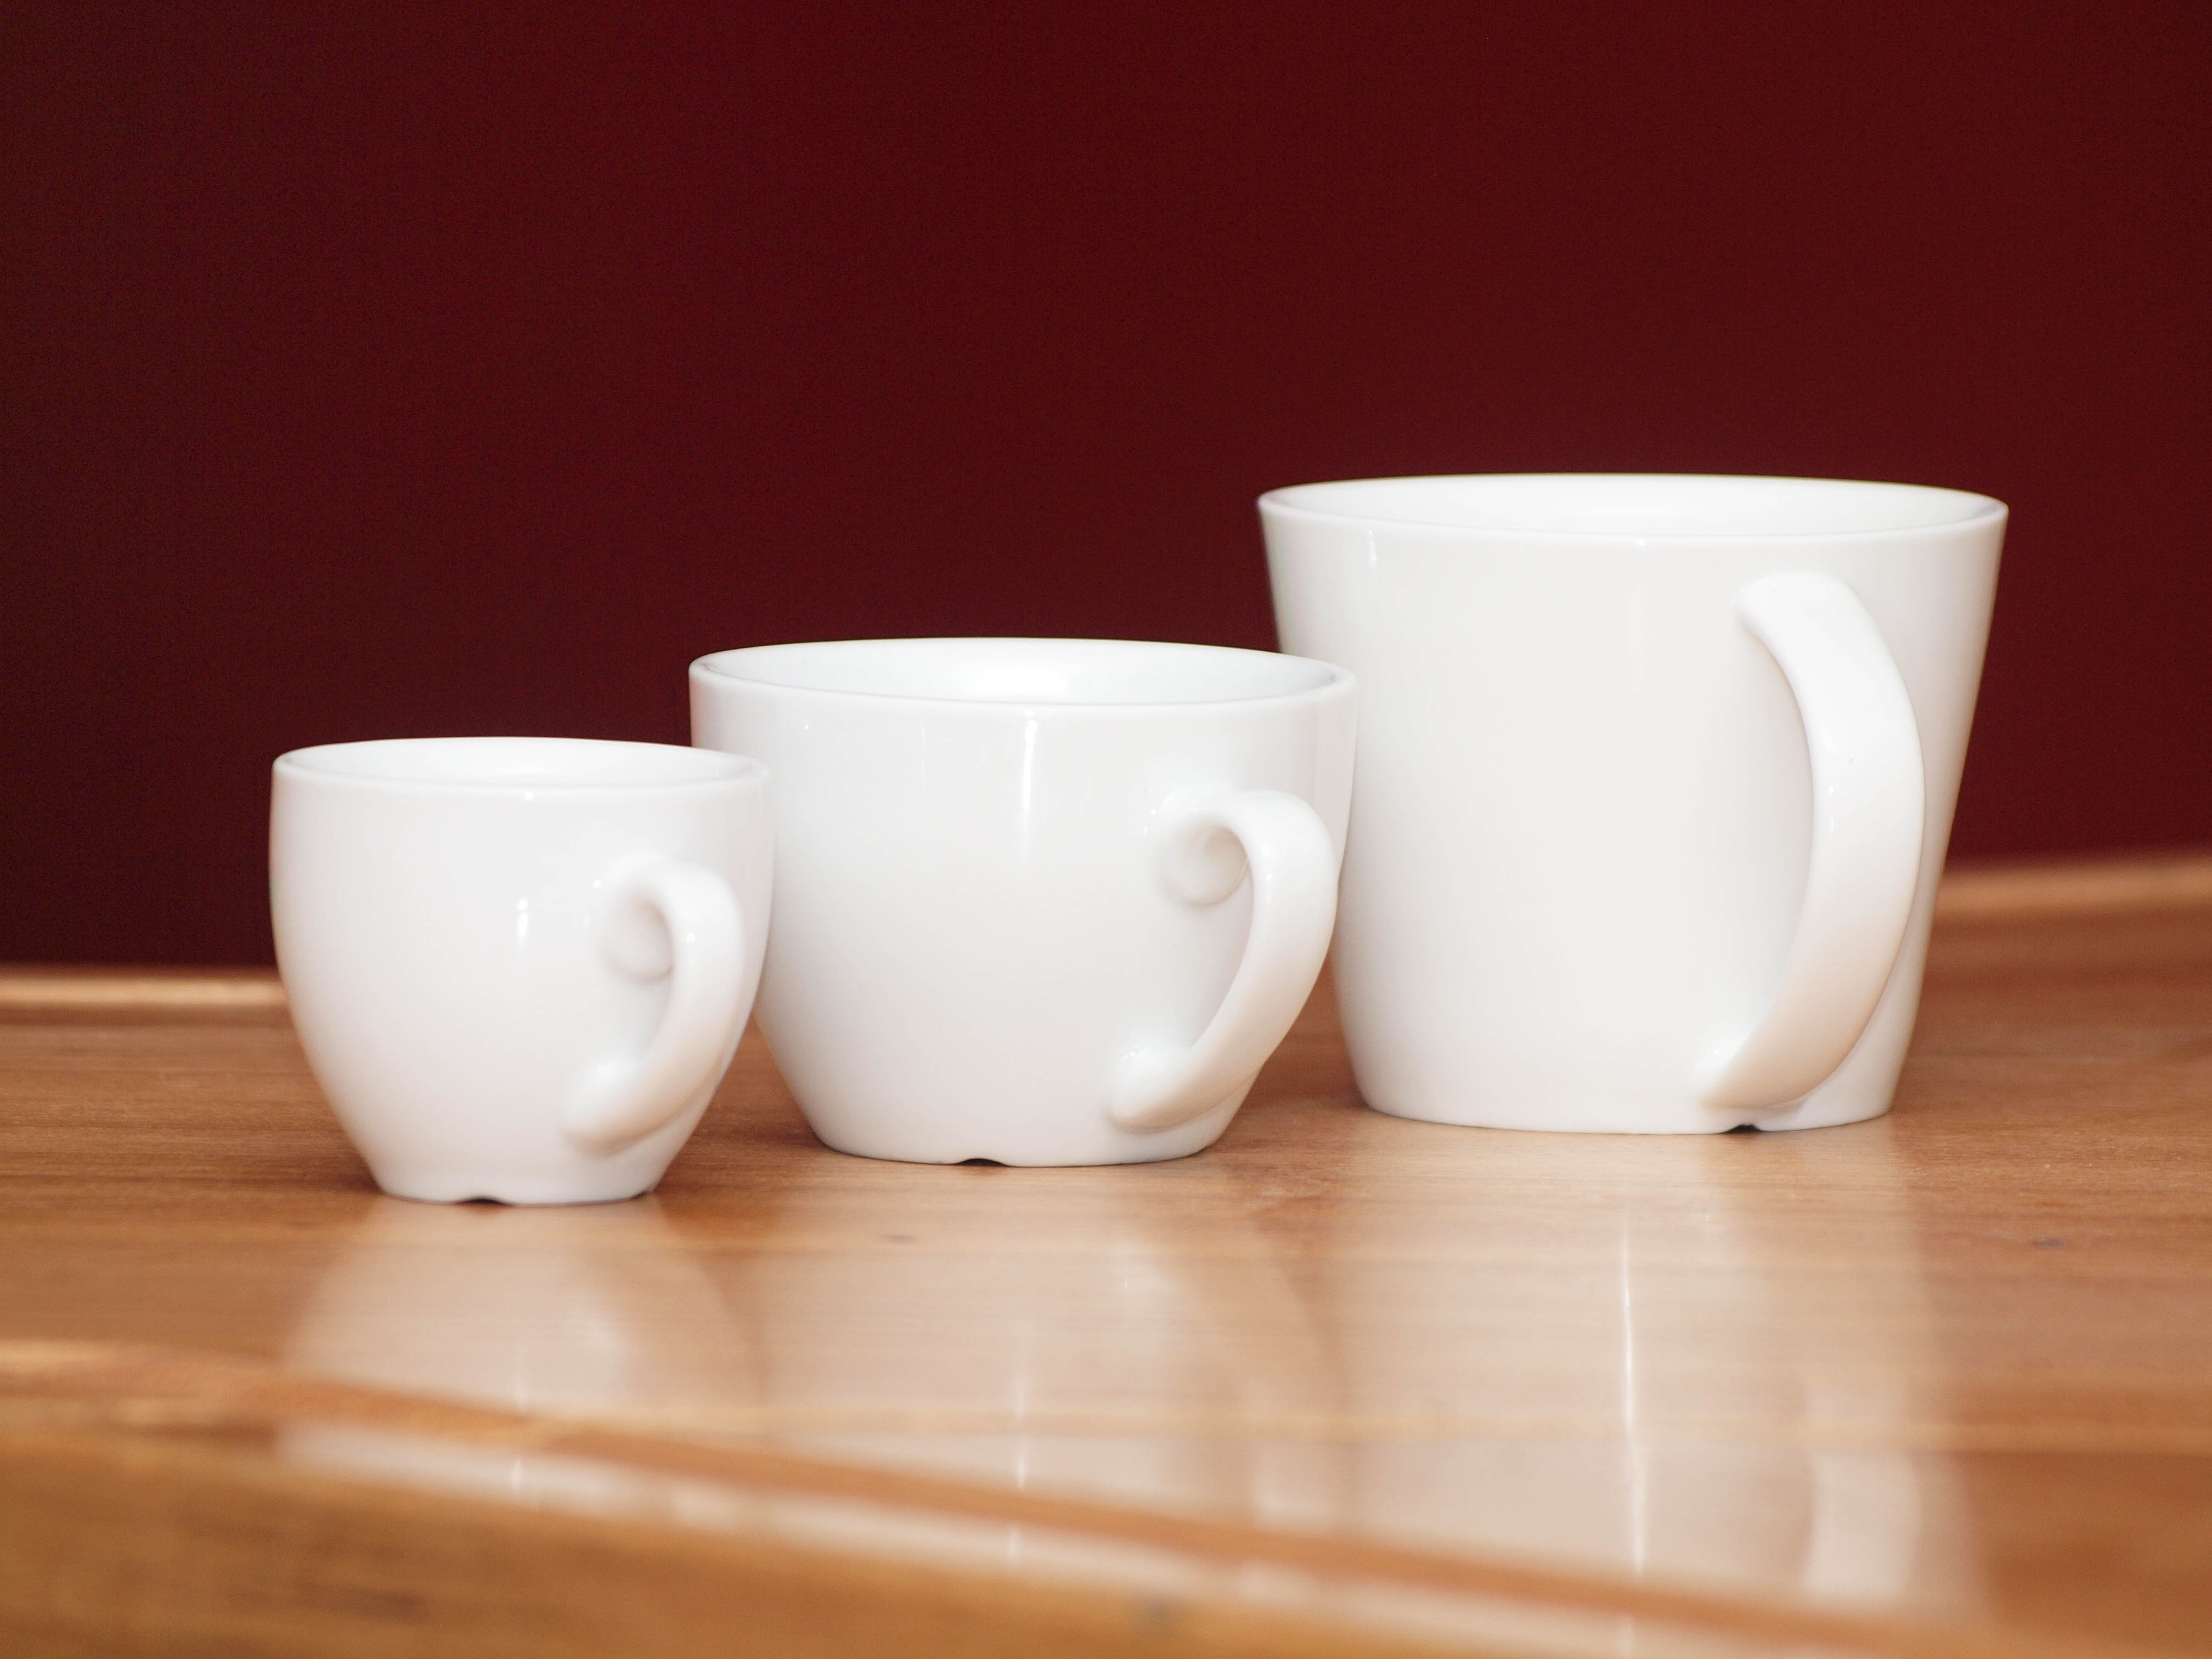 3 white ceramic mugs